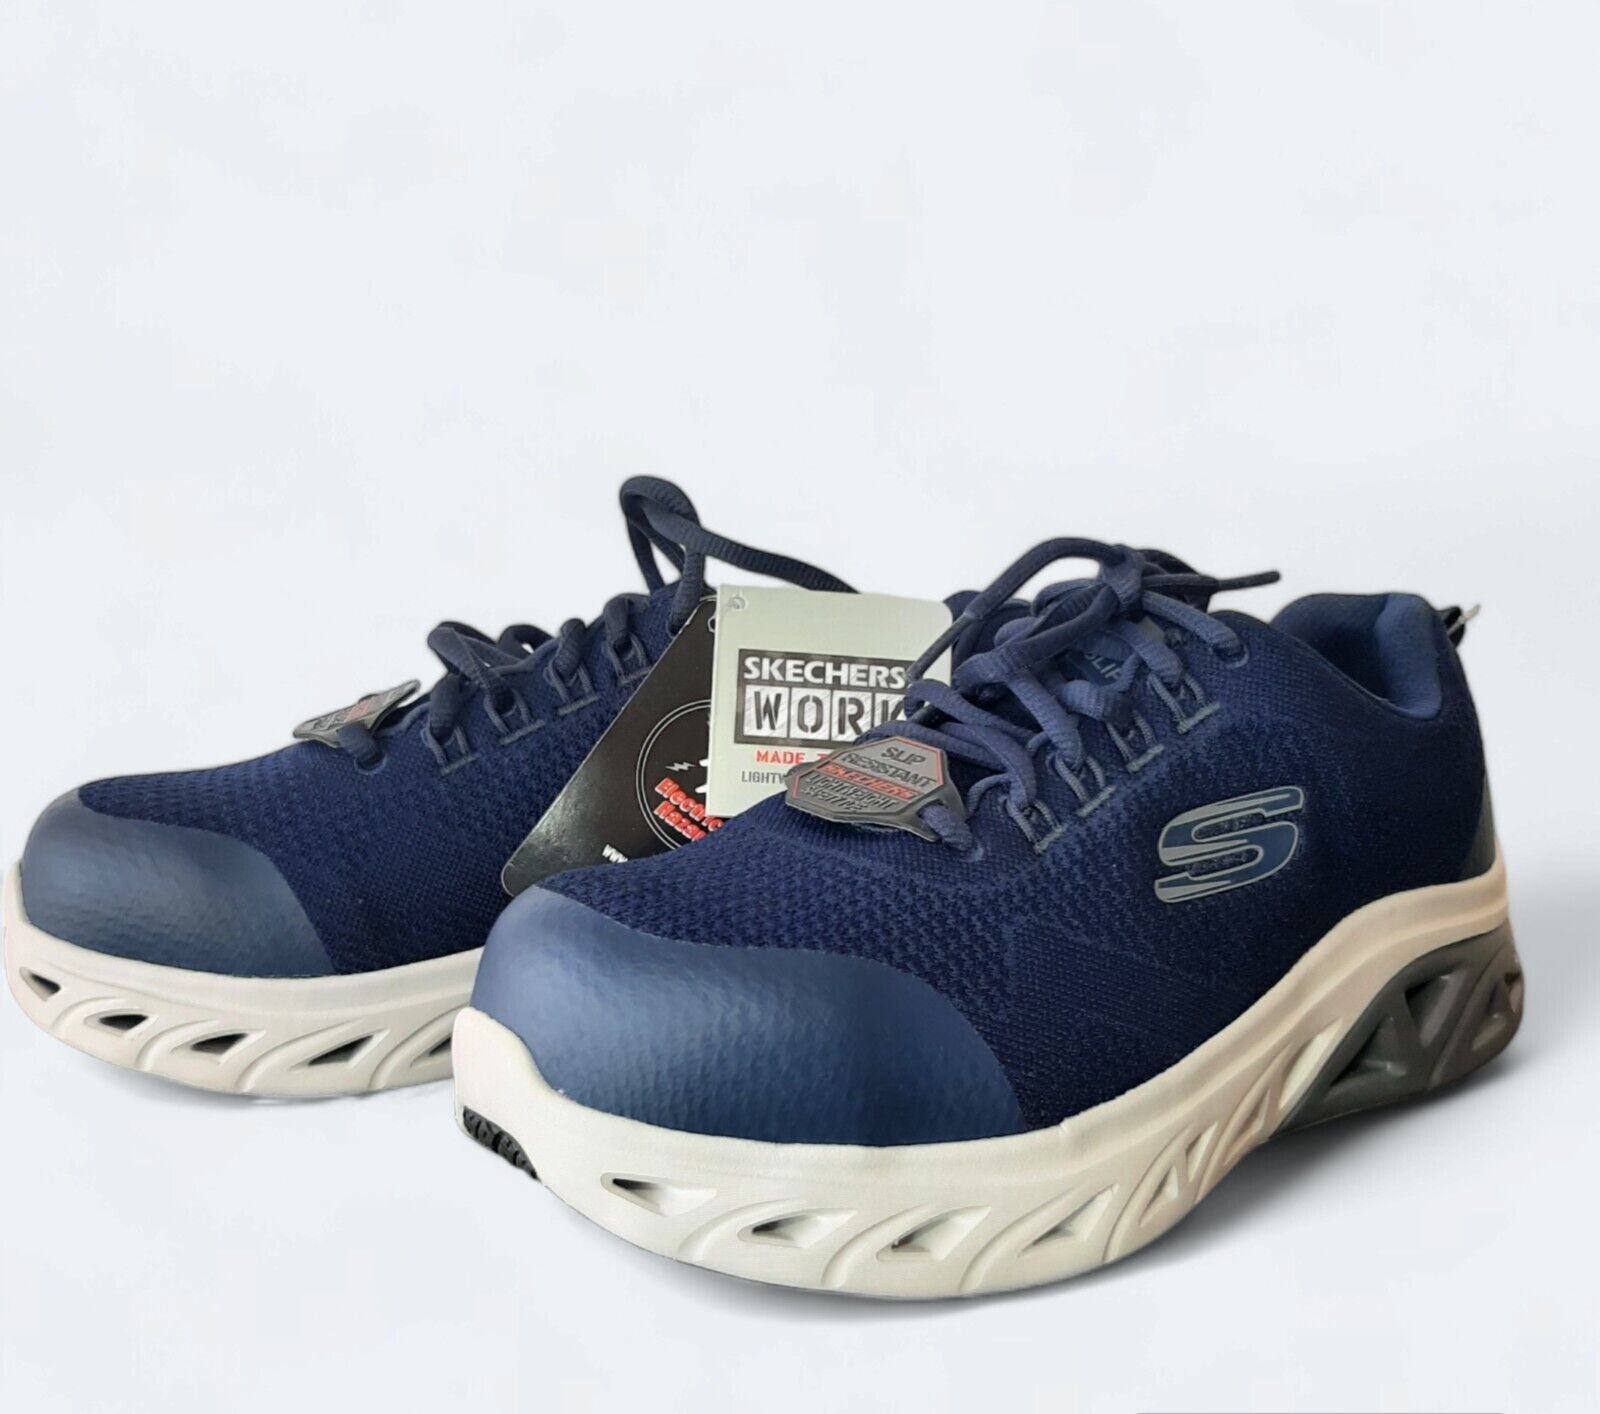 Skechers Work Men's US 7 Slip Resistant Safety Toe Air Cooled Memory Foam Shoes